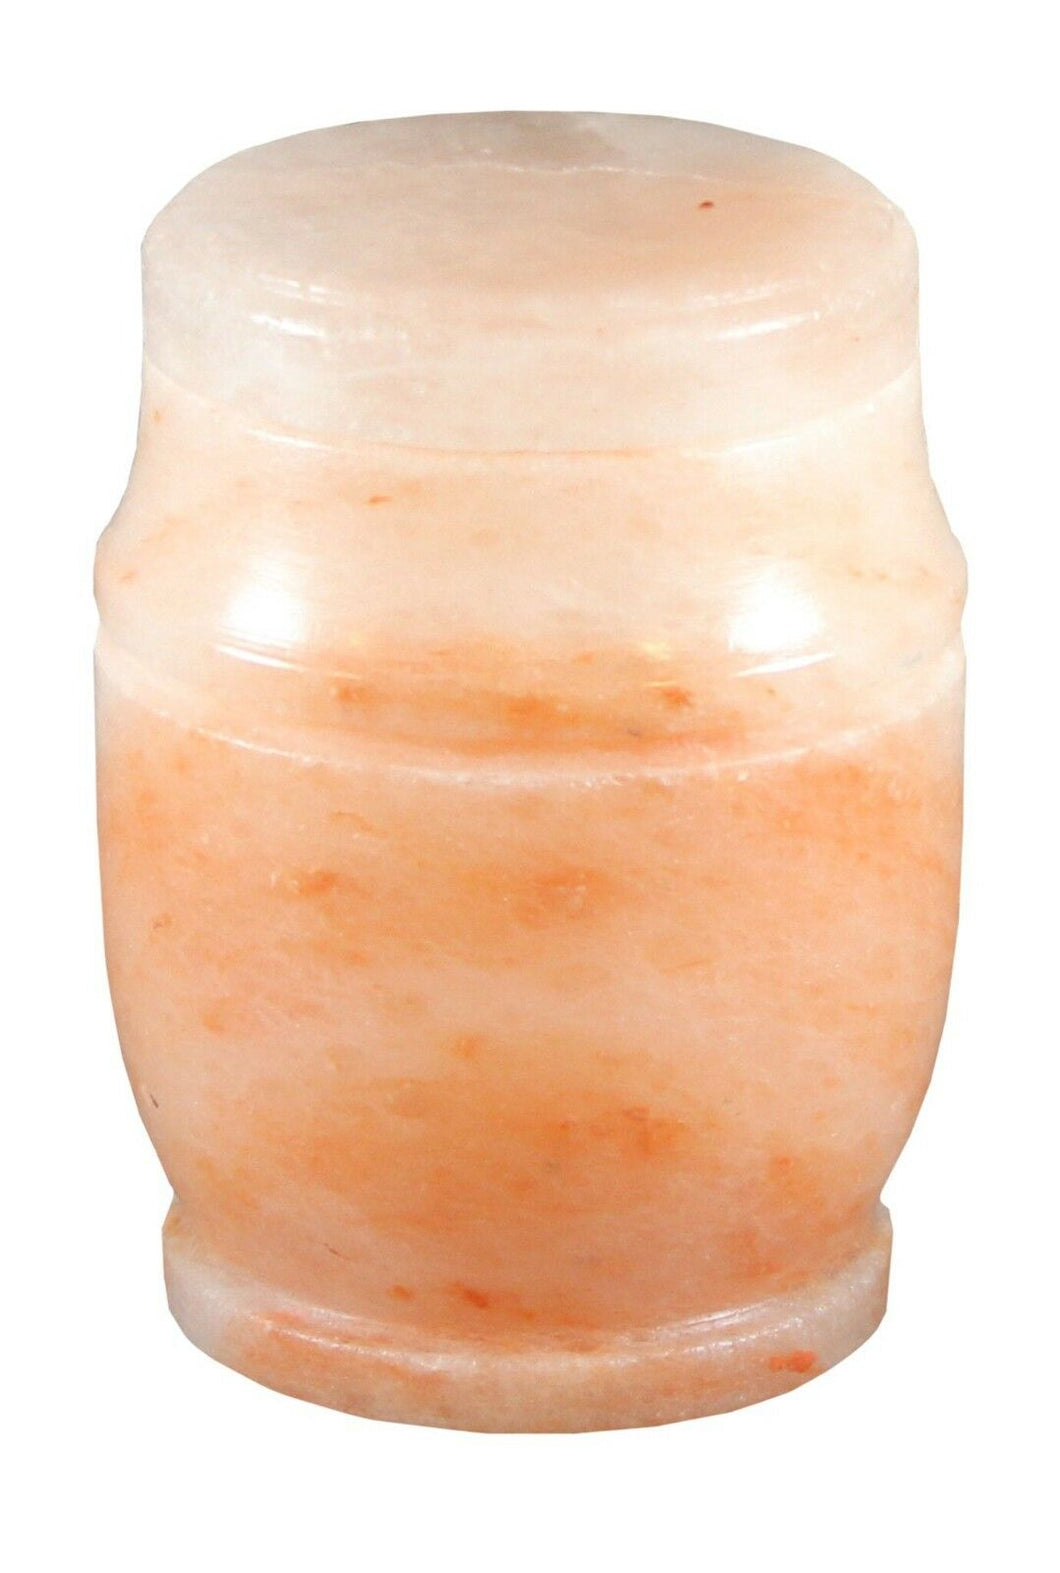 Bio-Degradable Eco-Friendly Salt Cremation Urn Keepsake / Mini, 40 Cubic Inches